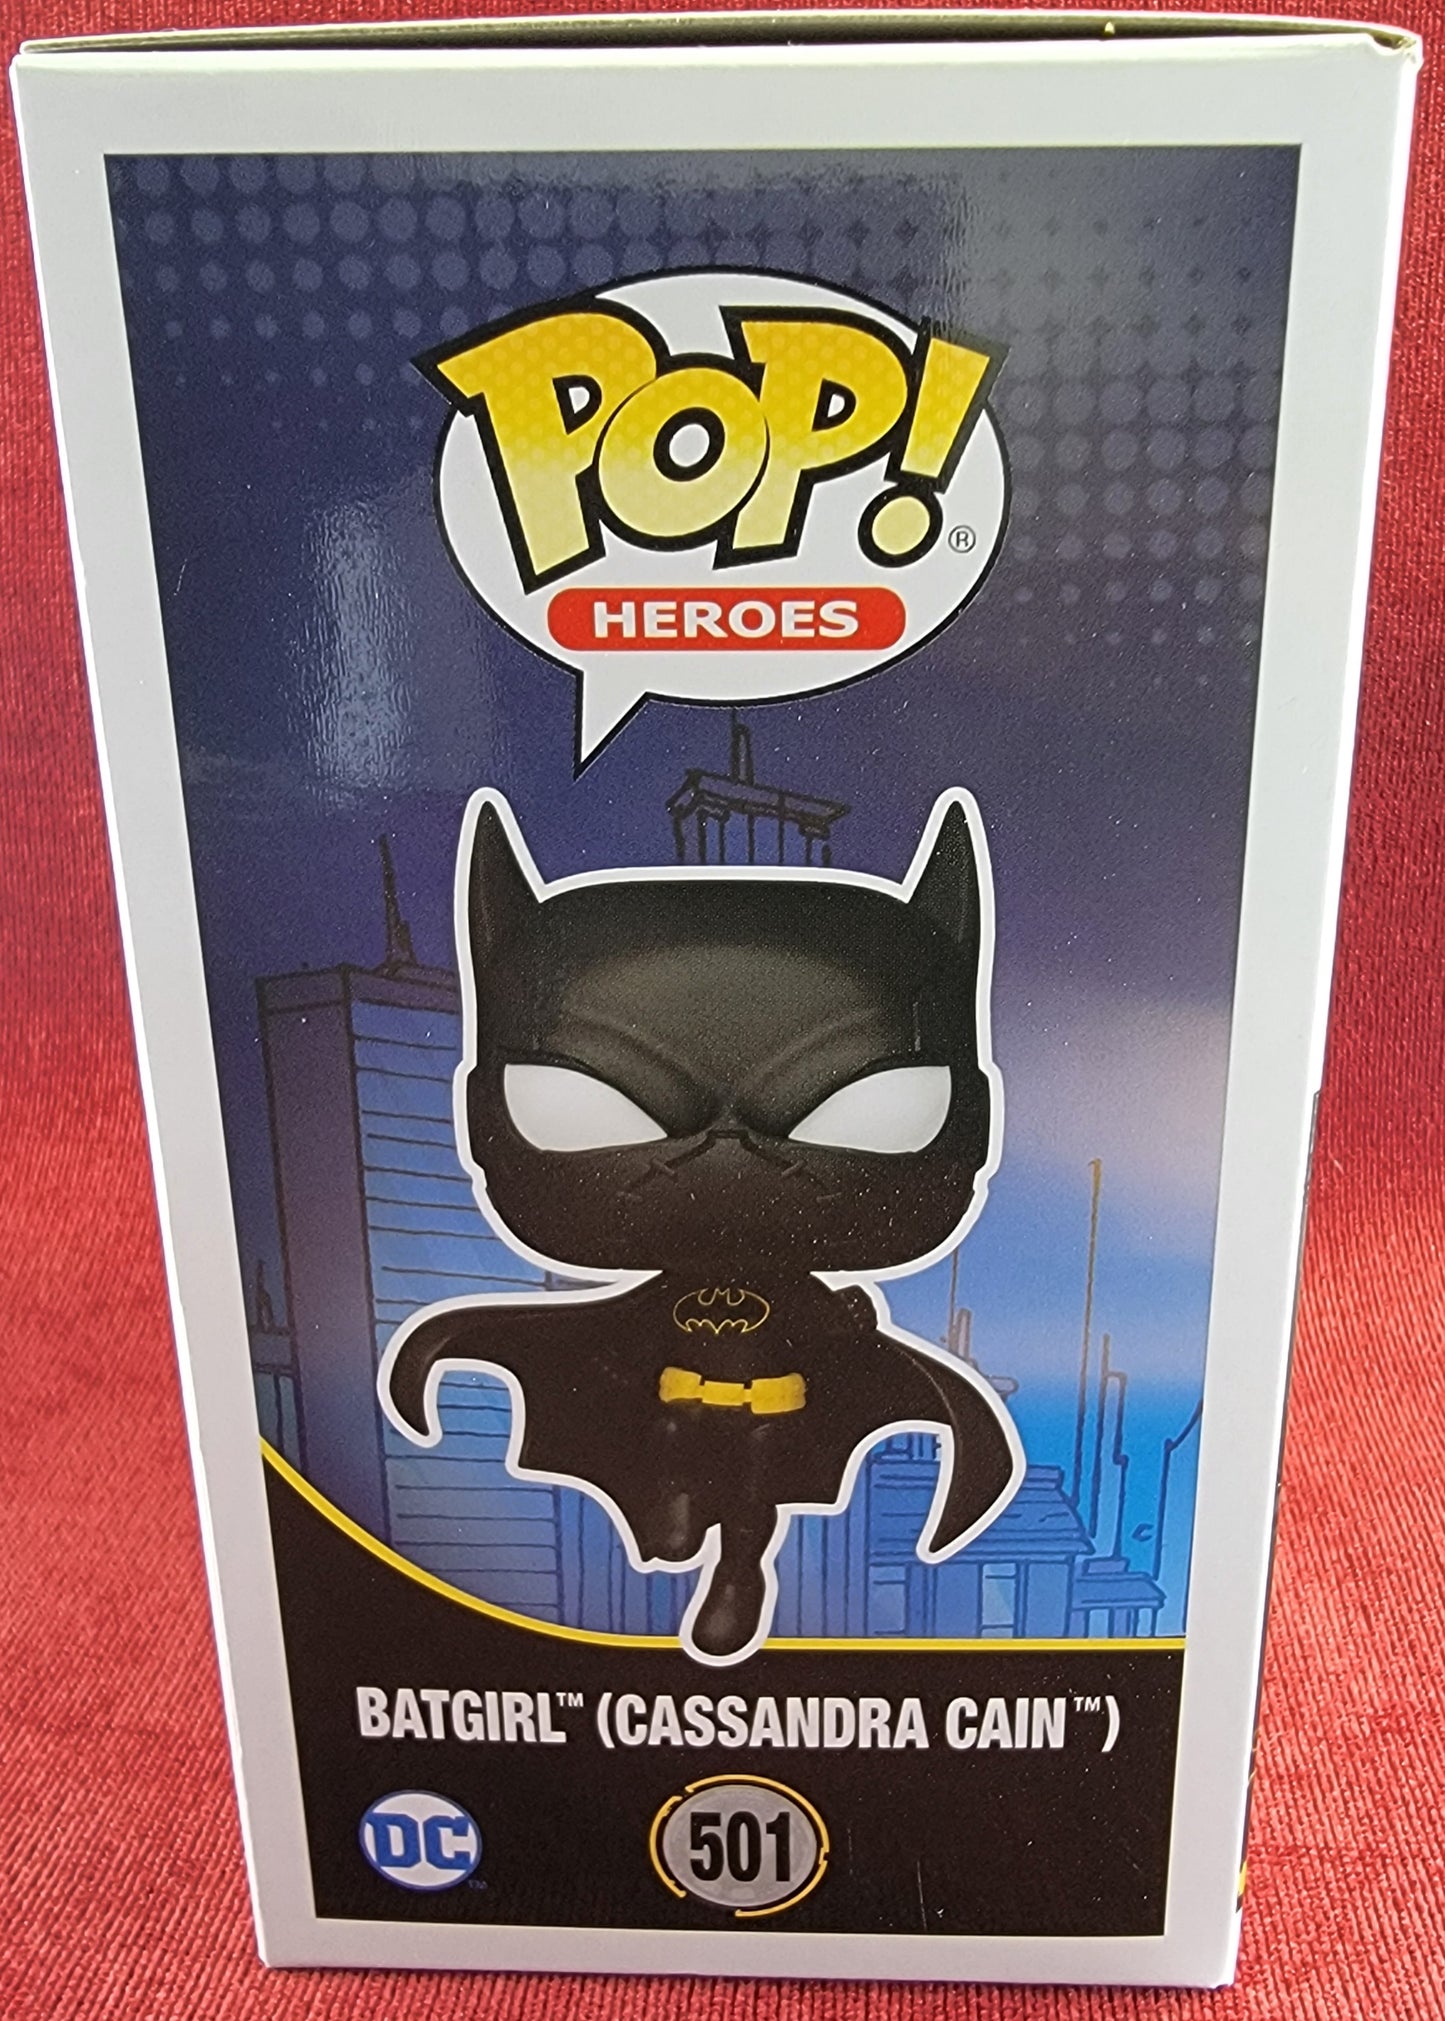 Batgirl (Cassandra cain) funko # 501 (nib)
With pop protector